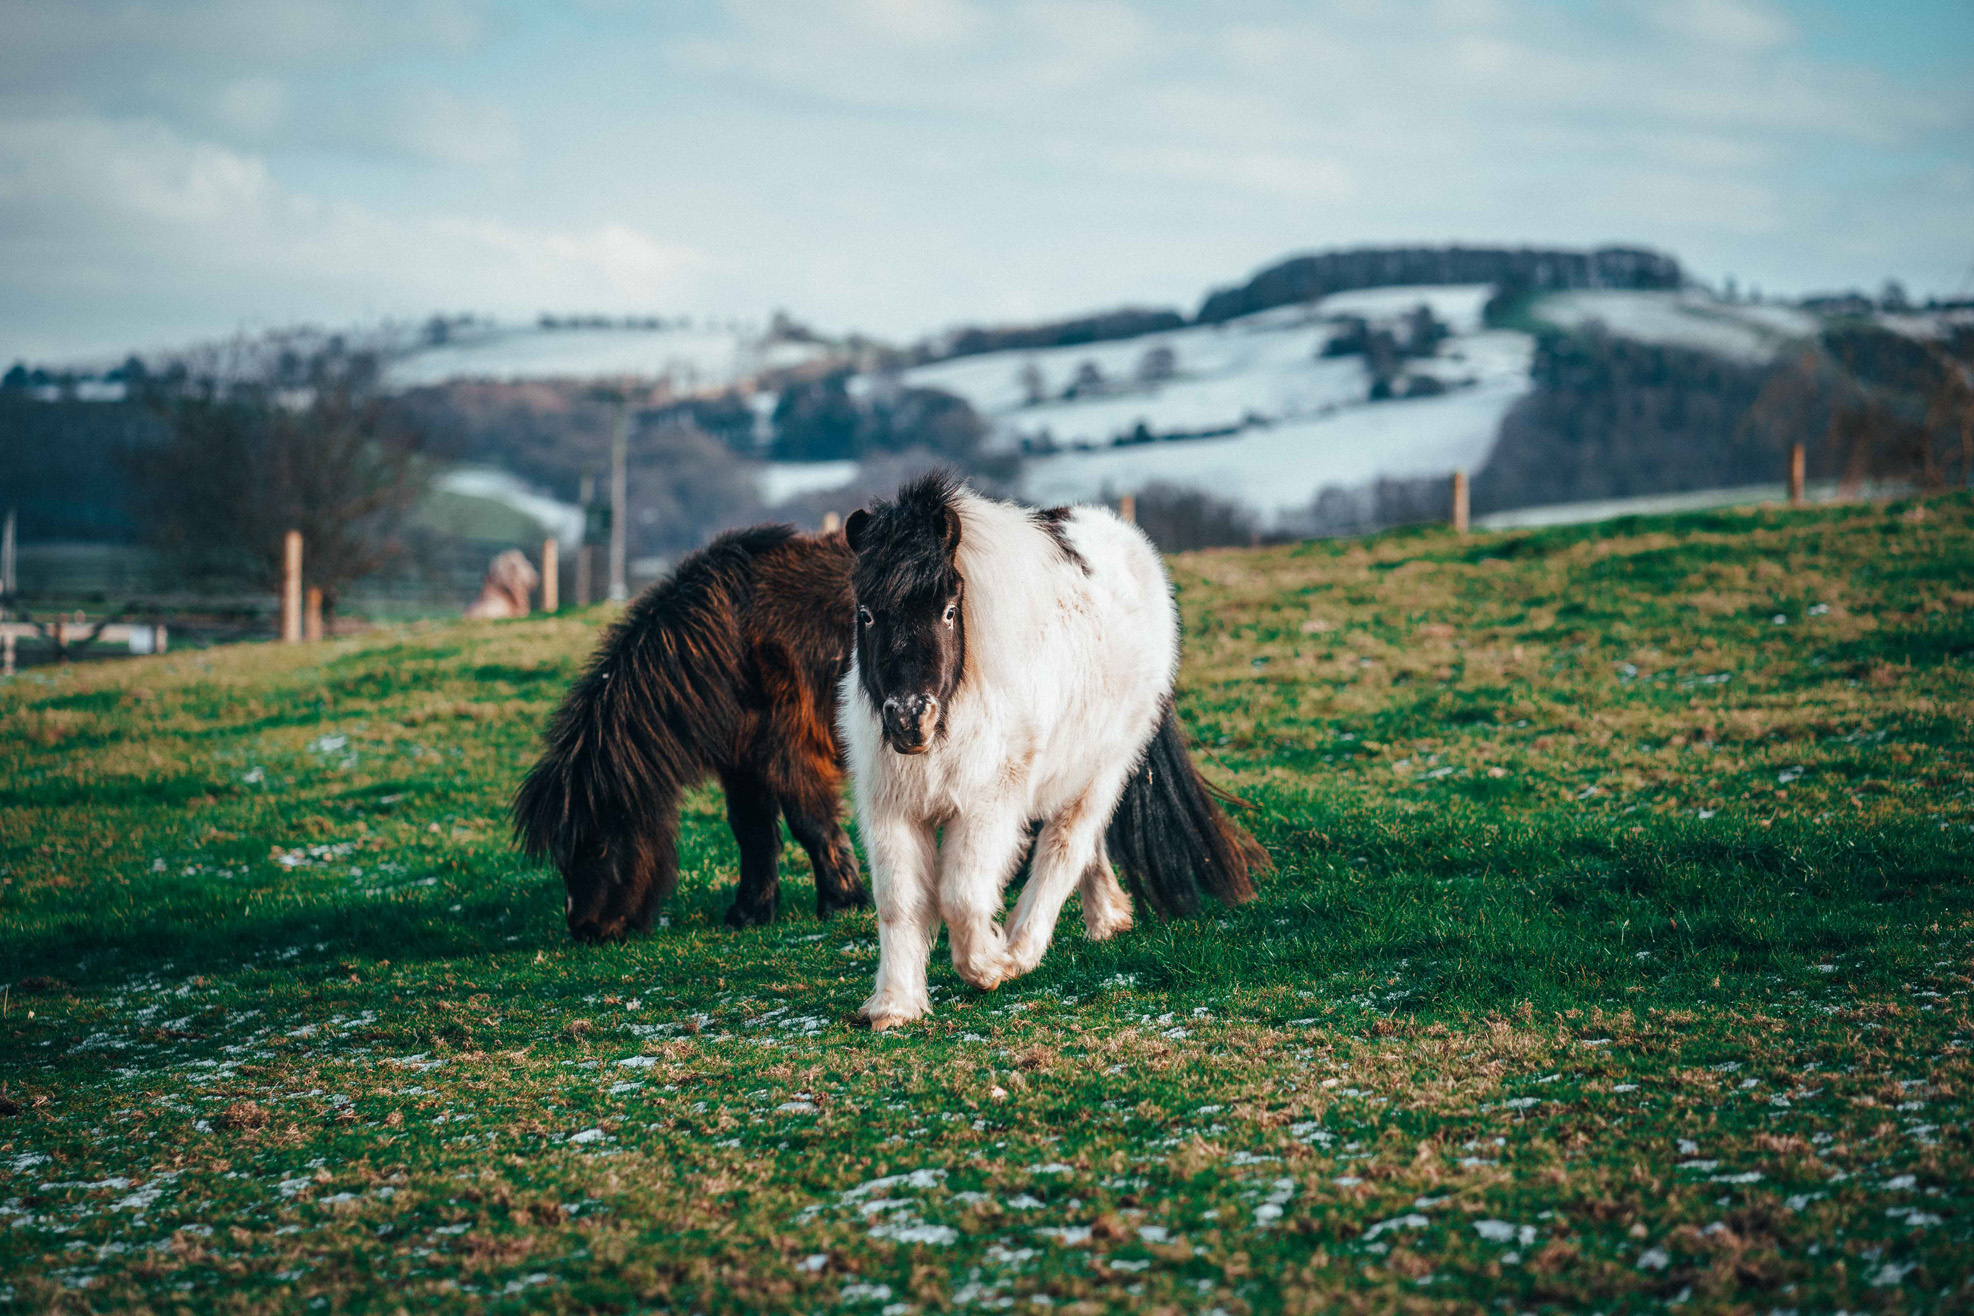 Our teo minaiture horses falabellas enjoying their paddock next to our luxury lodges